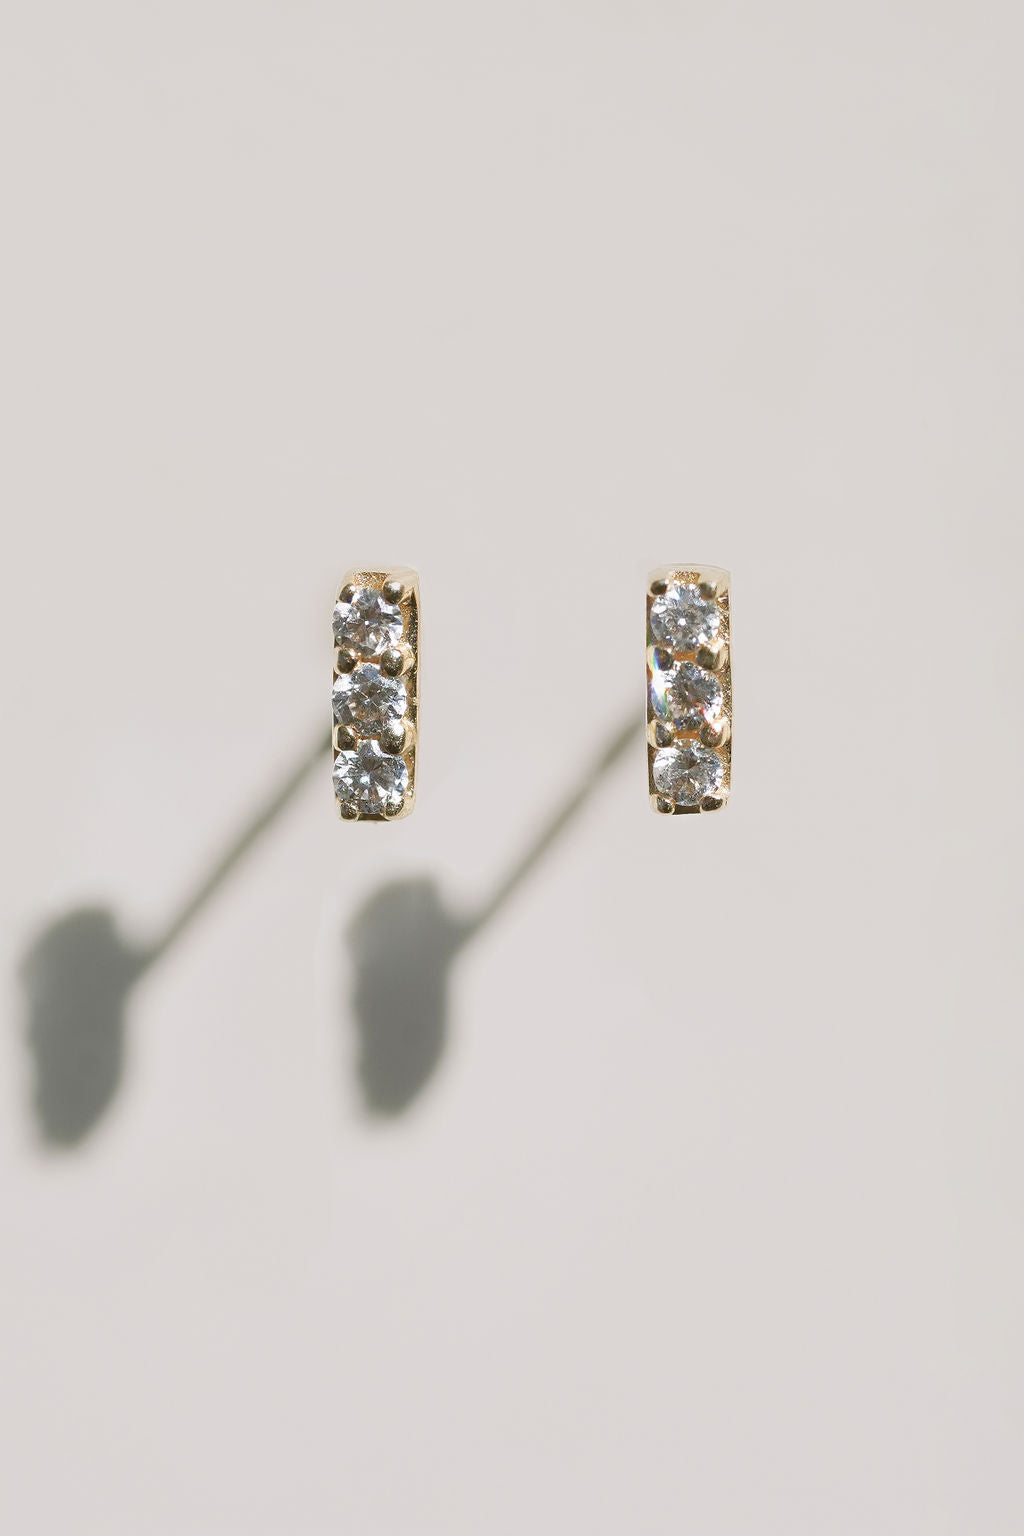 The Gemstone with Diamond Bar Stud Earring